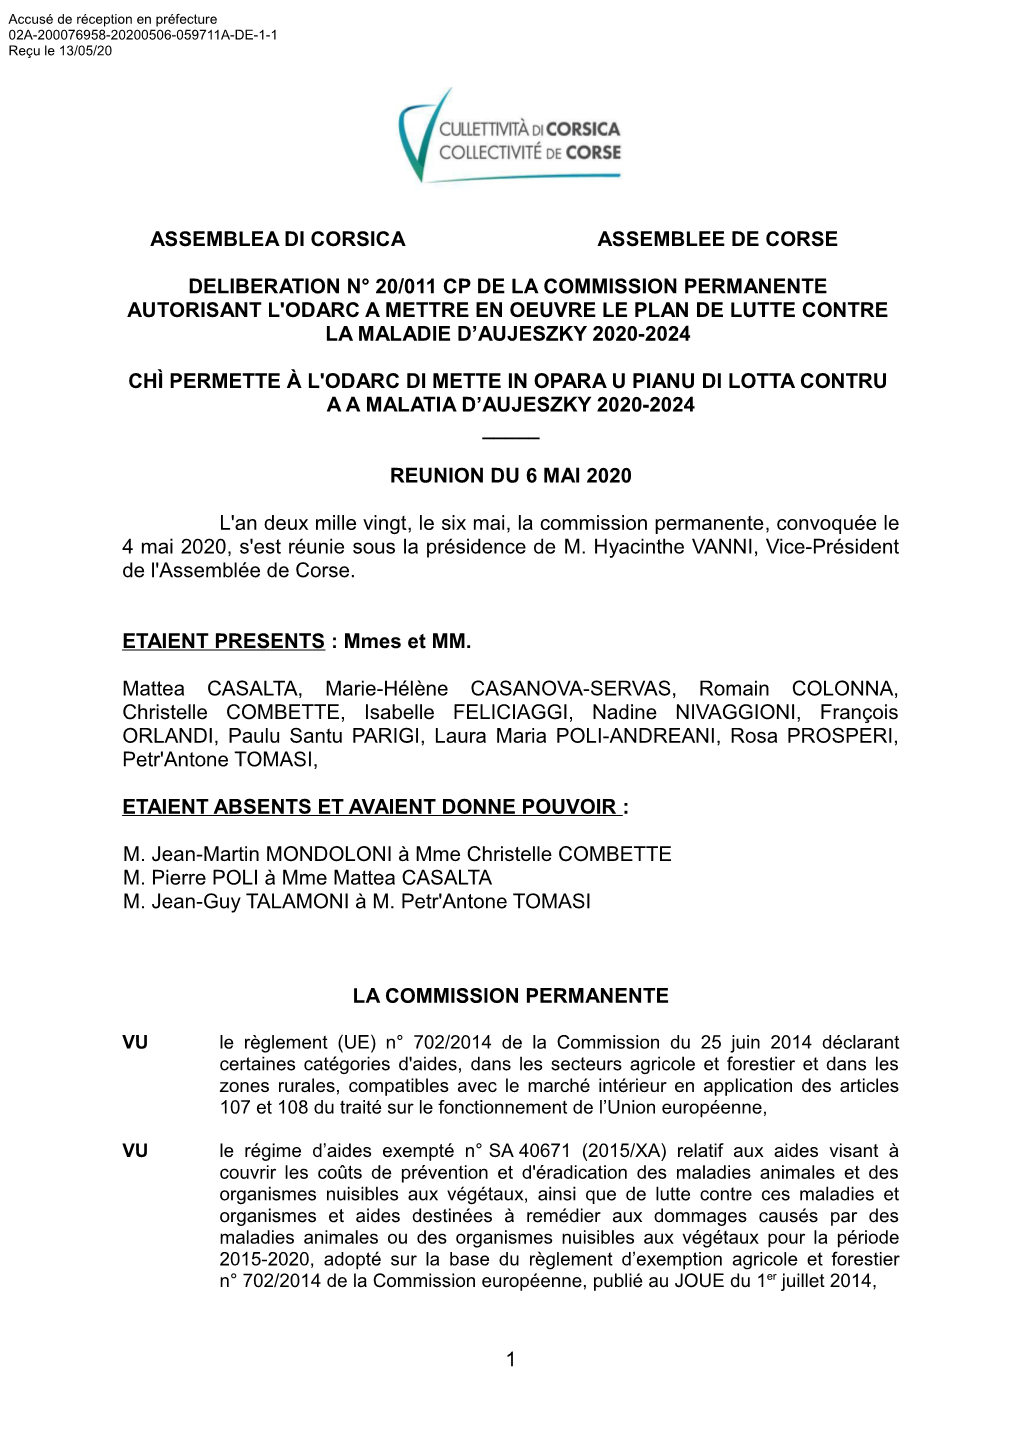 Assemblea Di Corsica Assemblee De Corse